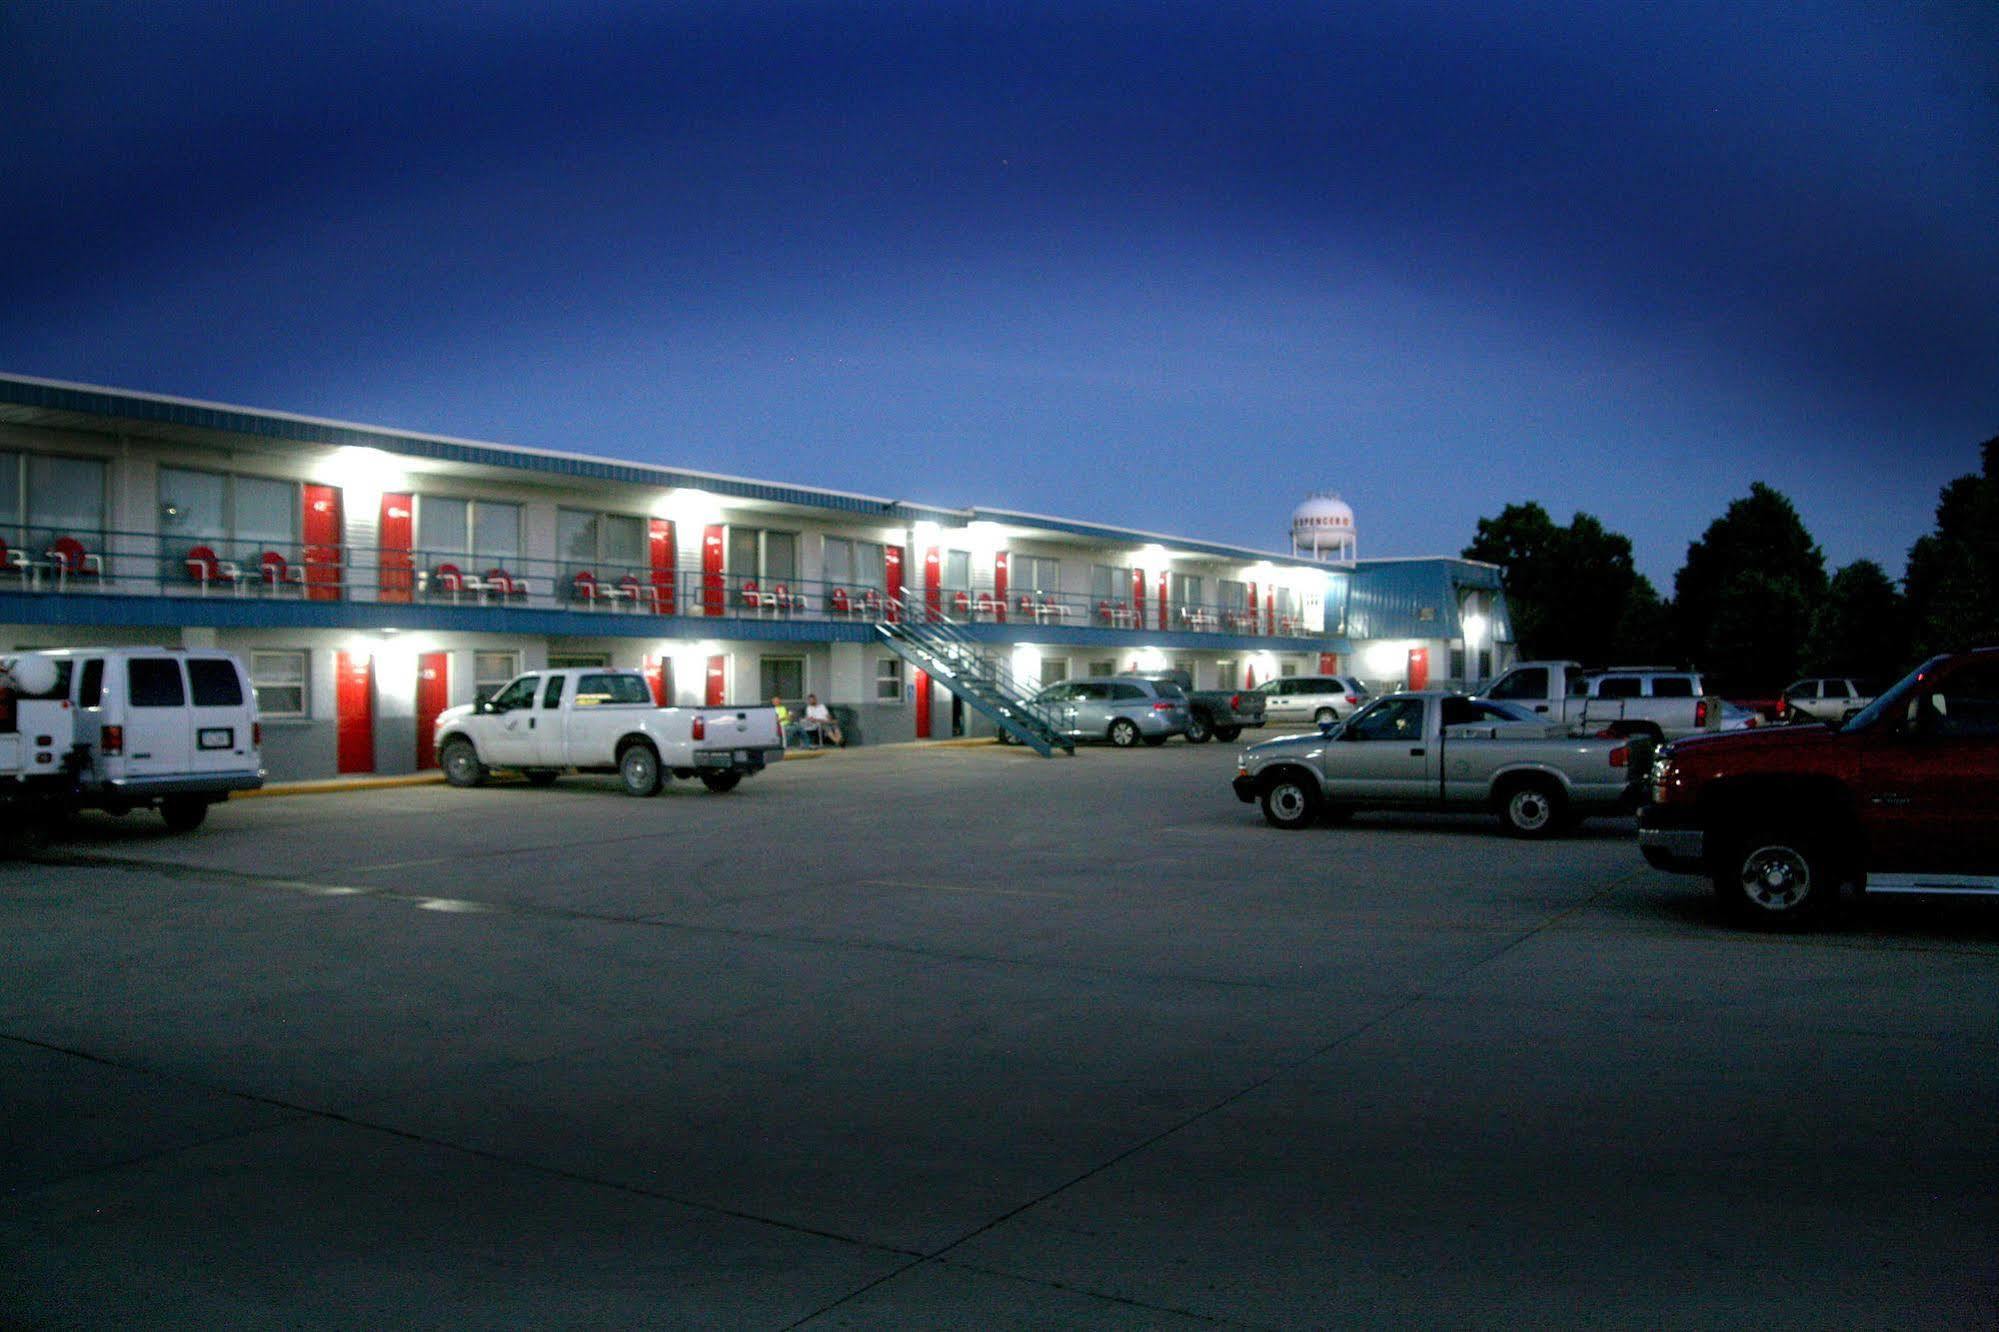 South T Motel Spencer Exterior photo